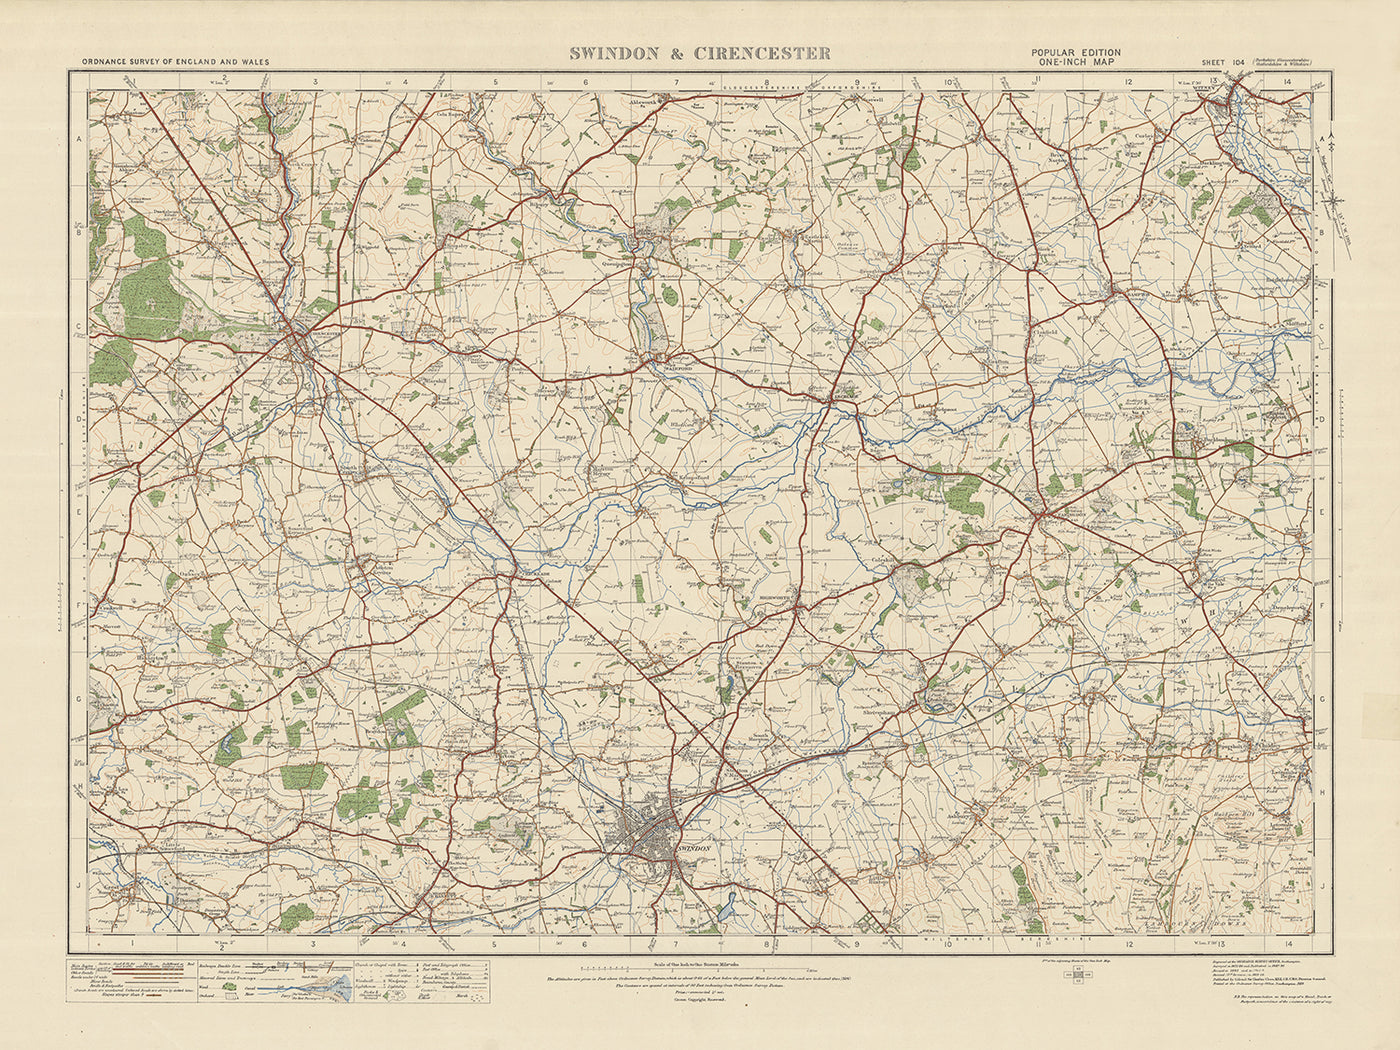 Old Ordnance Survey Map, Sheet 104 - Swindon & Cirencester, 1925: Faringdon, Highworth, Witney, Carterton, Lechlade, The White Horse